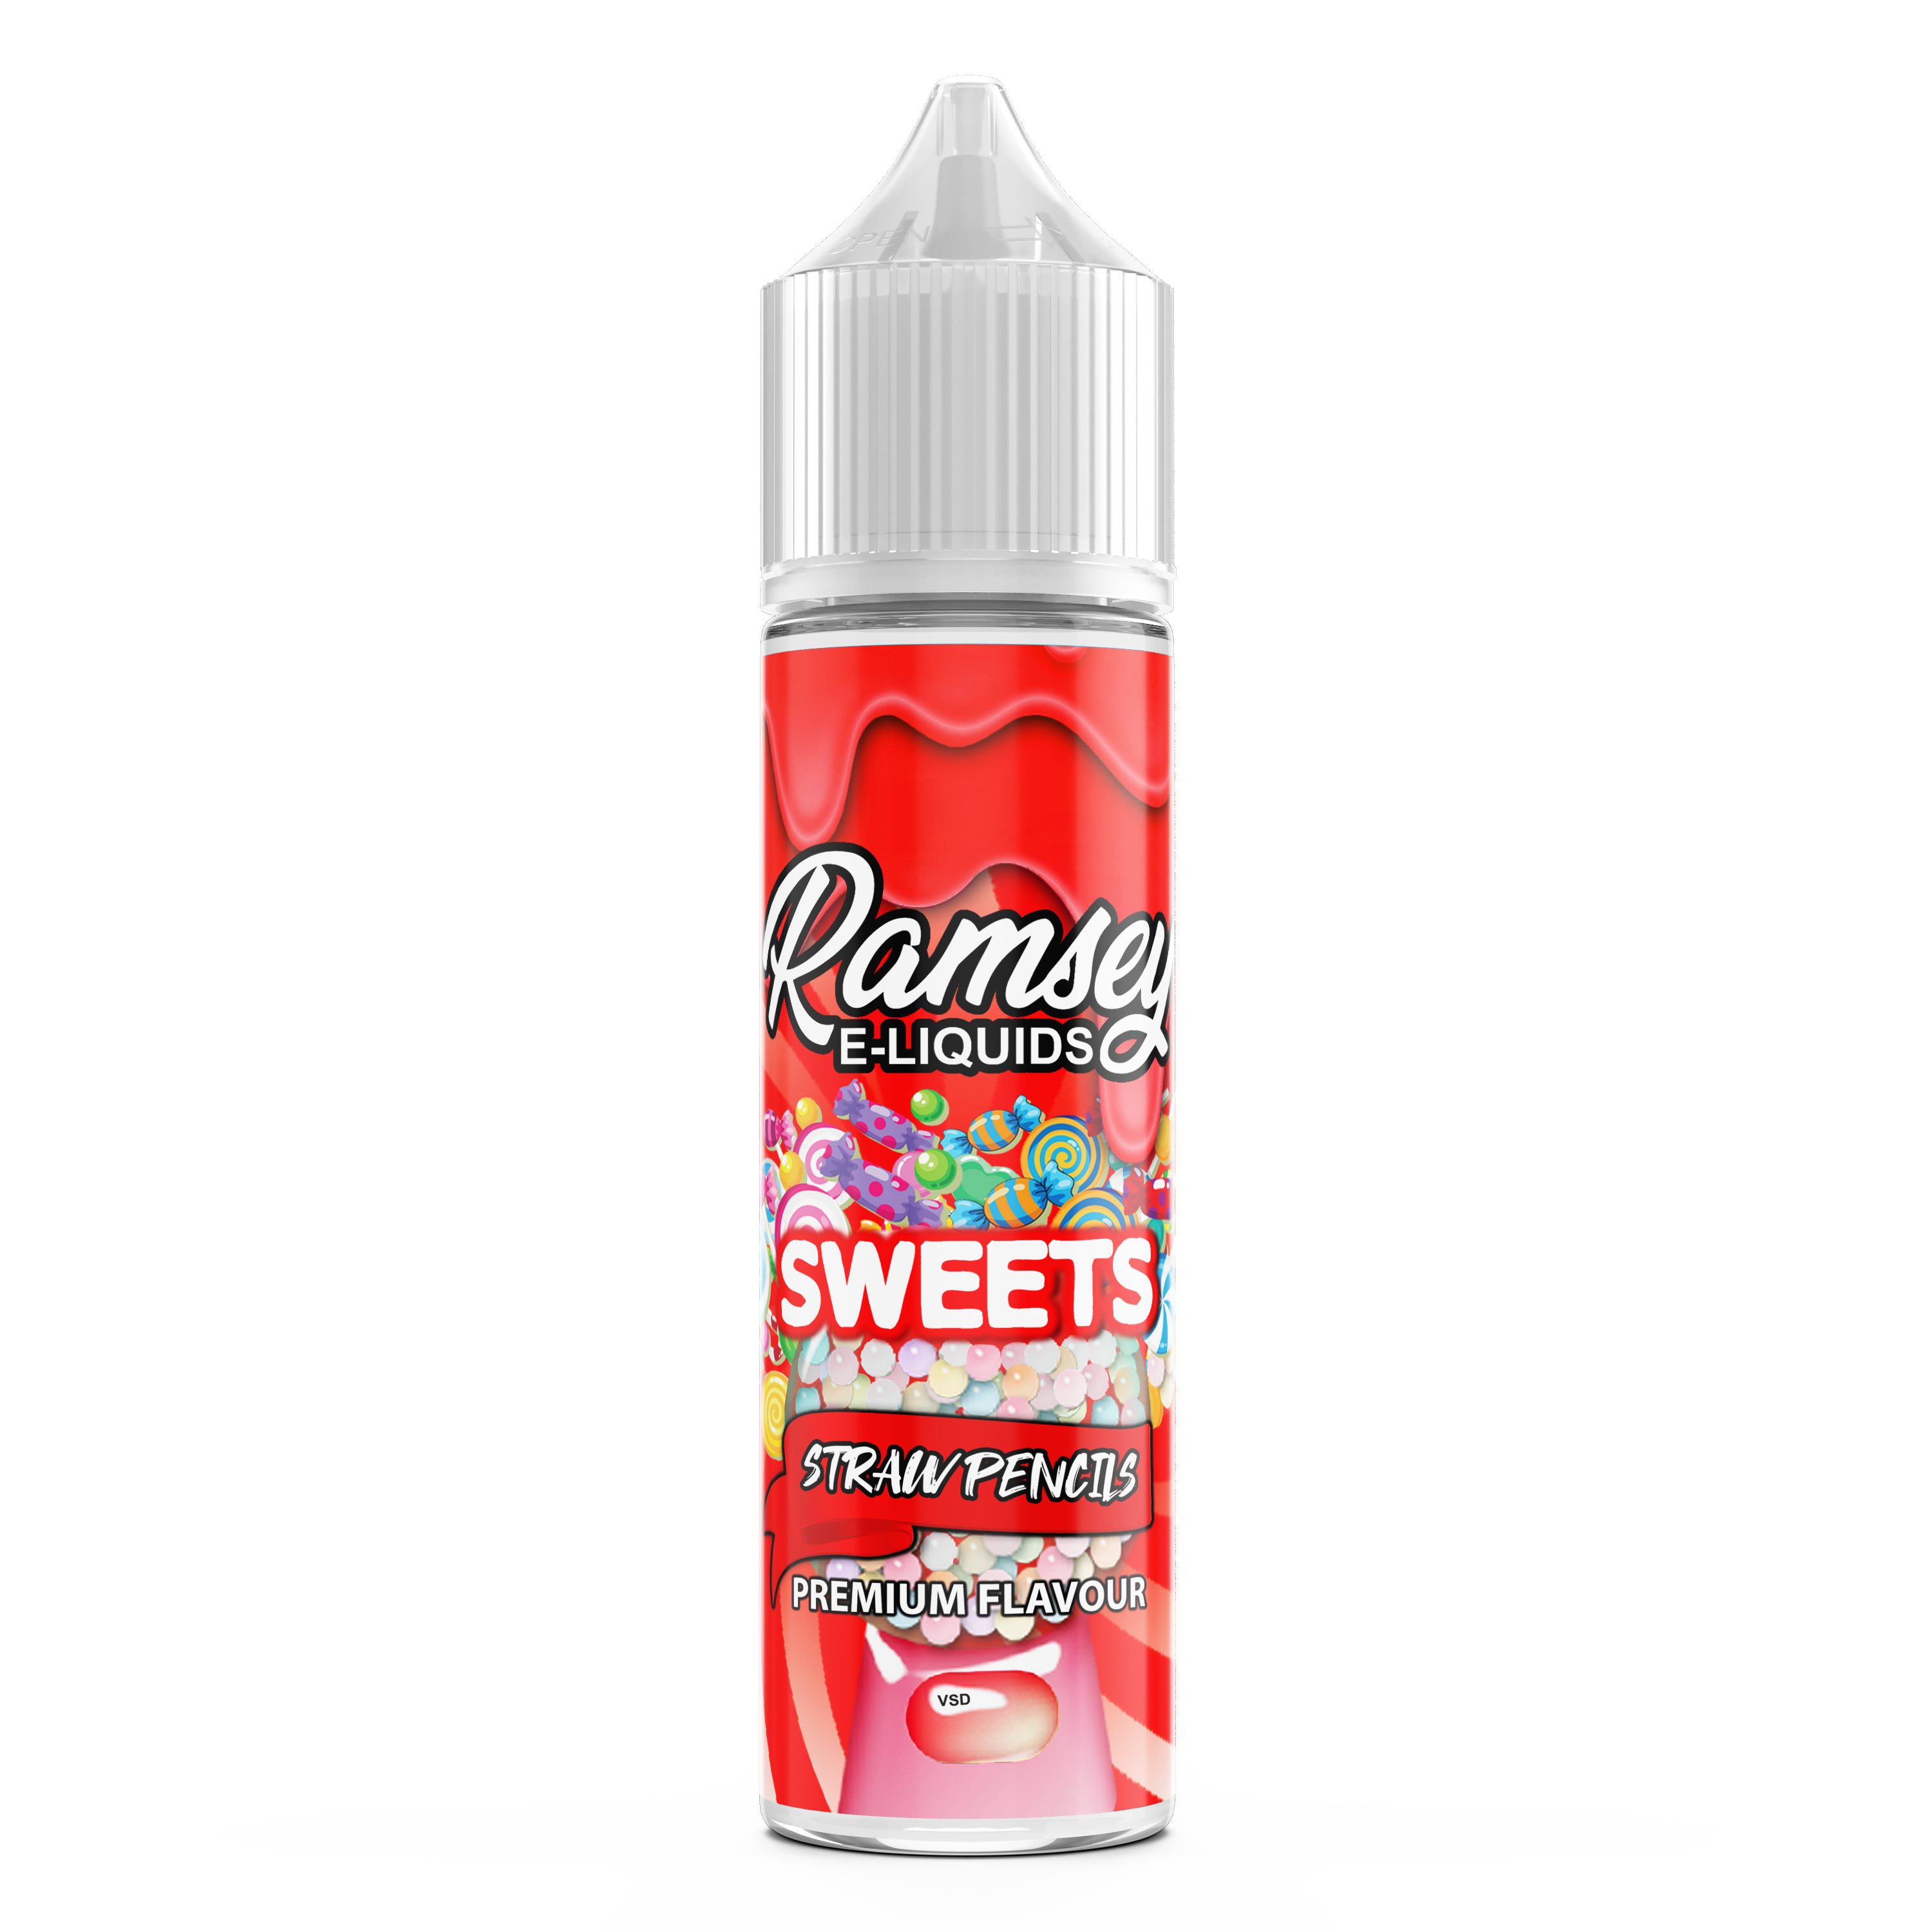 Ramsey E-Liquids Sweets Strawberry Pencils 0mg 50ml Shortfill E-Liquid